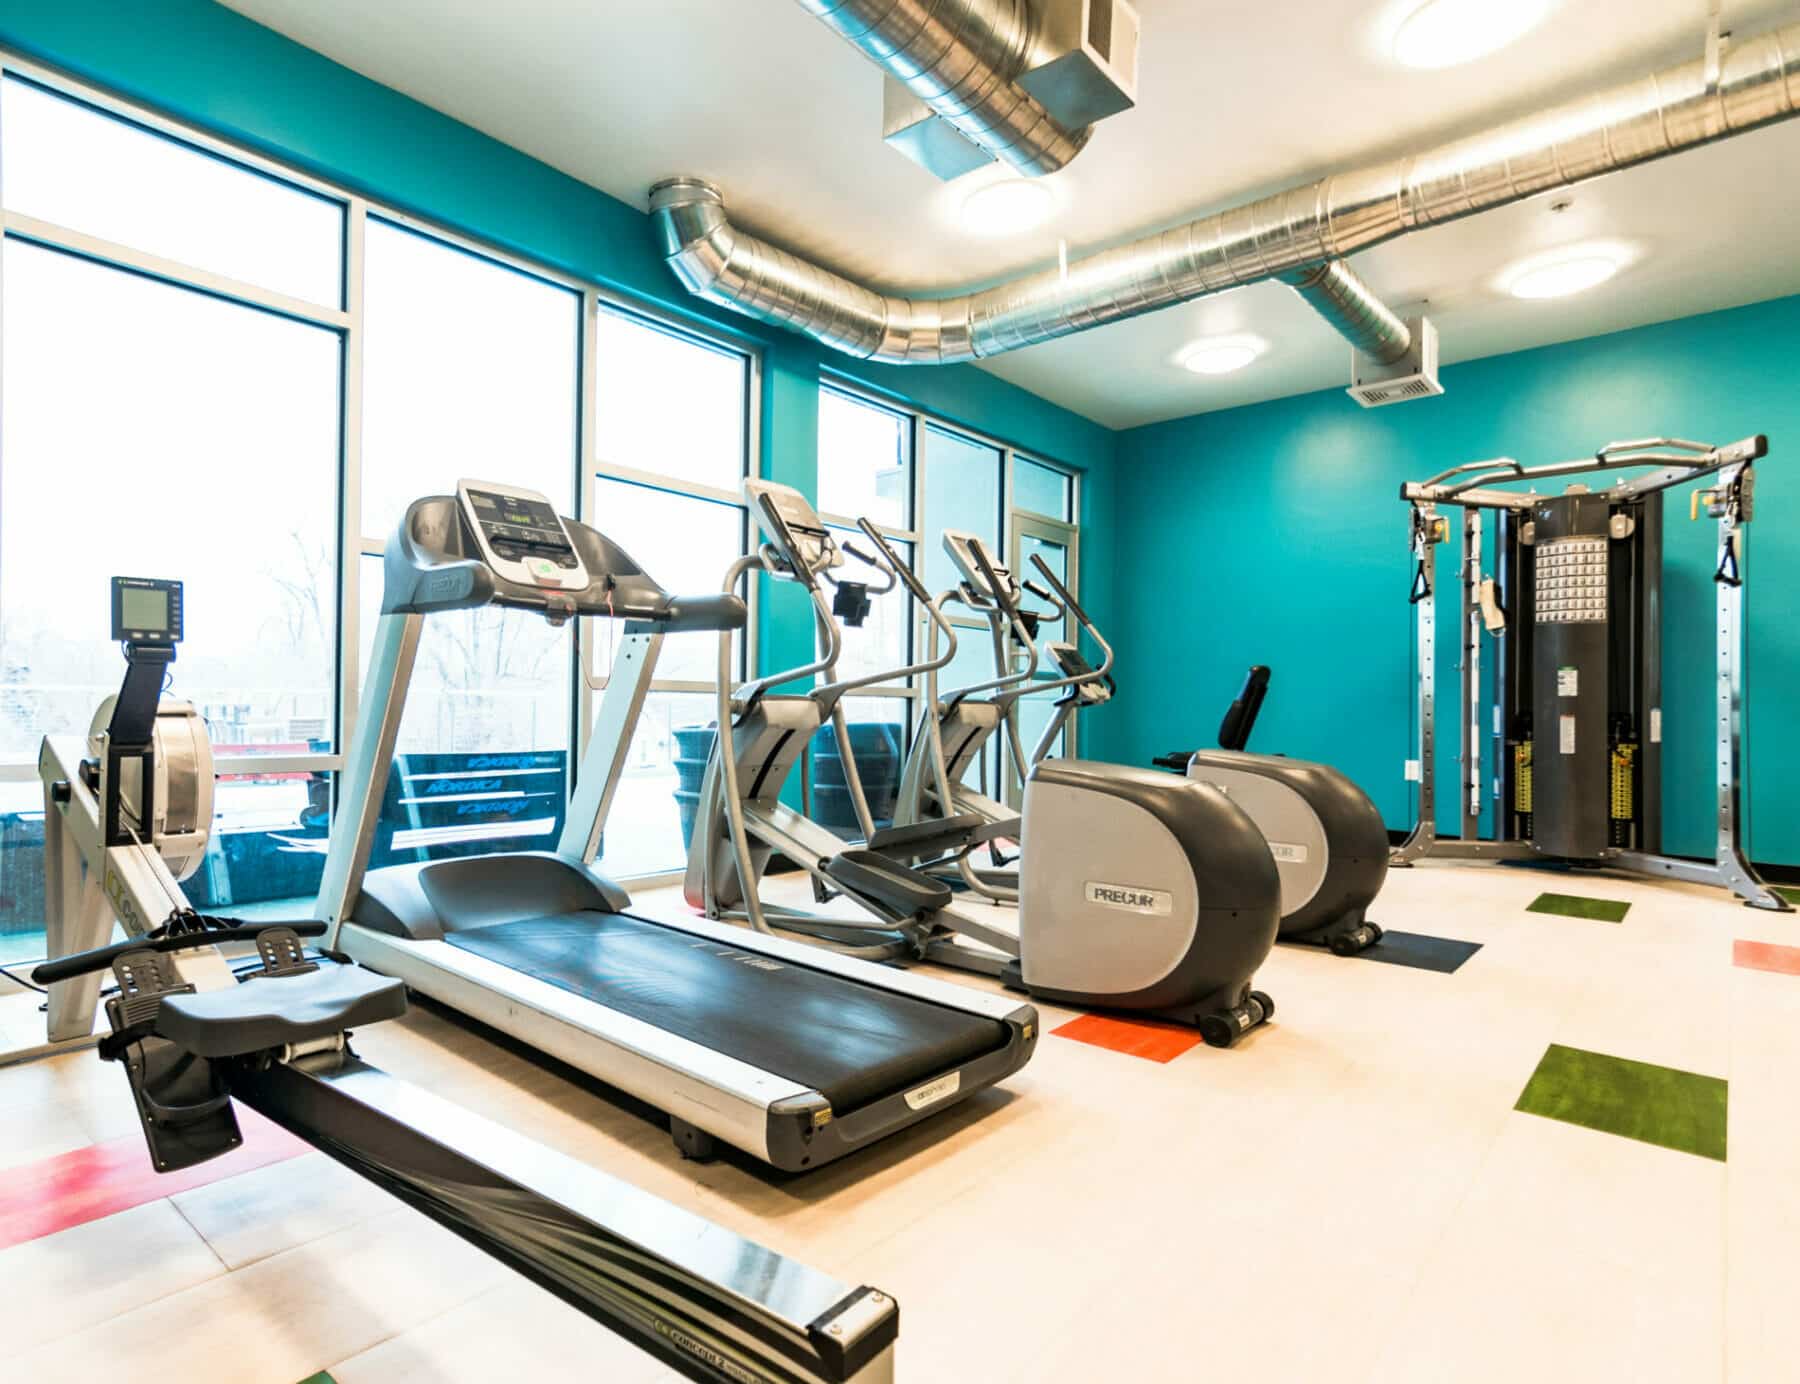 treadmills in gym - interior designs by Think Architecture